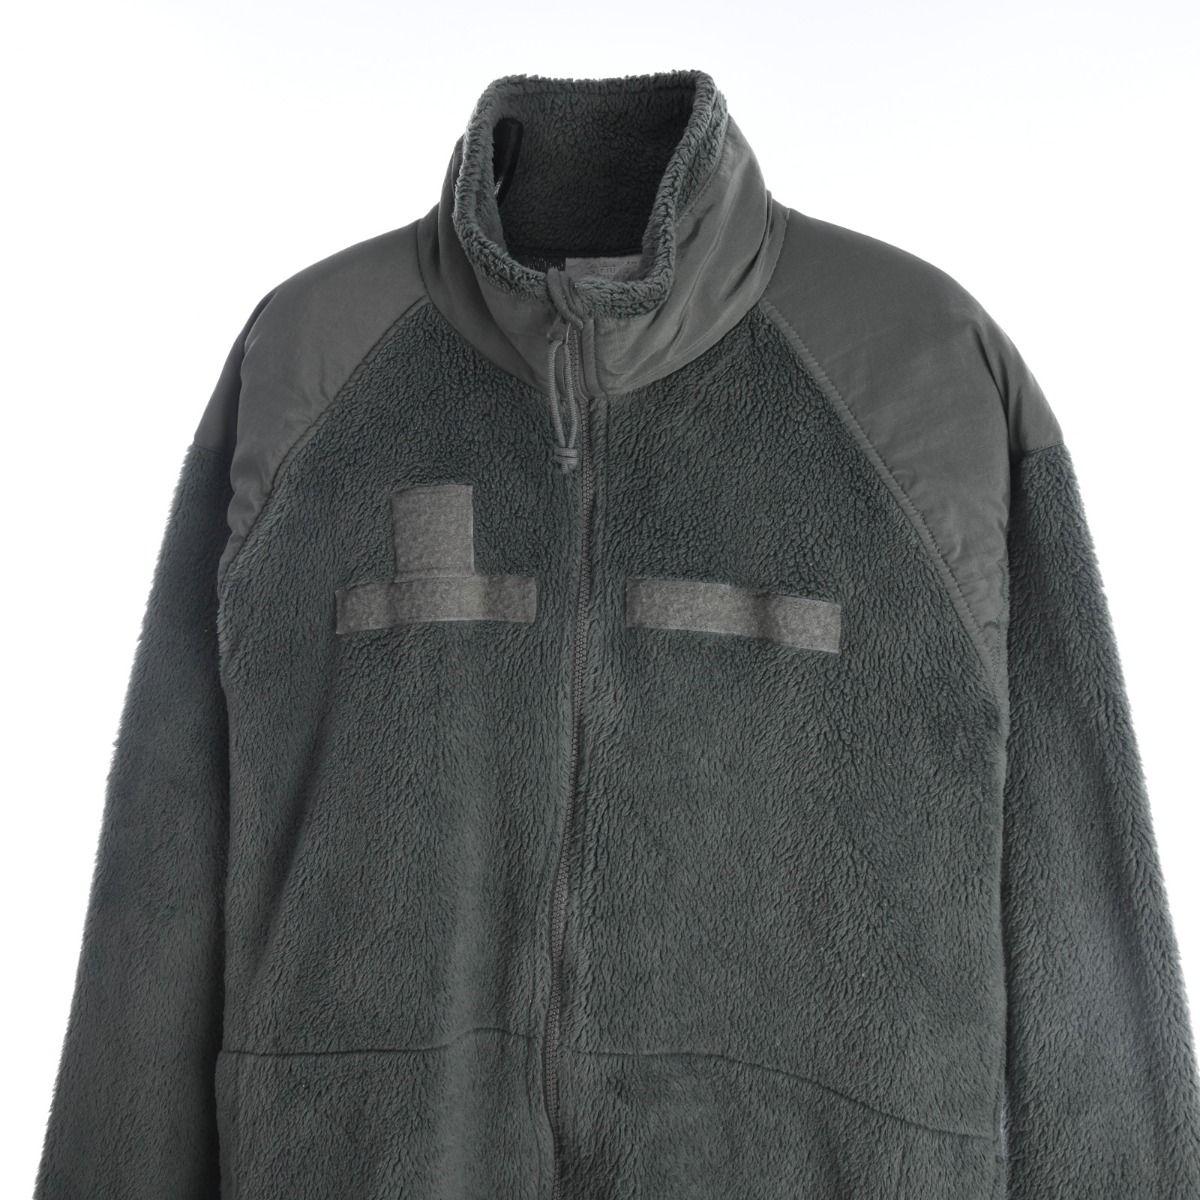 US Military Gen III Polartec Cold Weather Polar L Size Fleece Jacket 